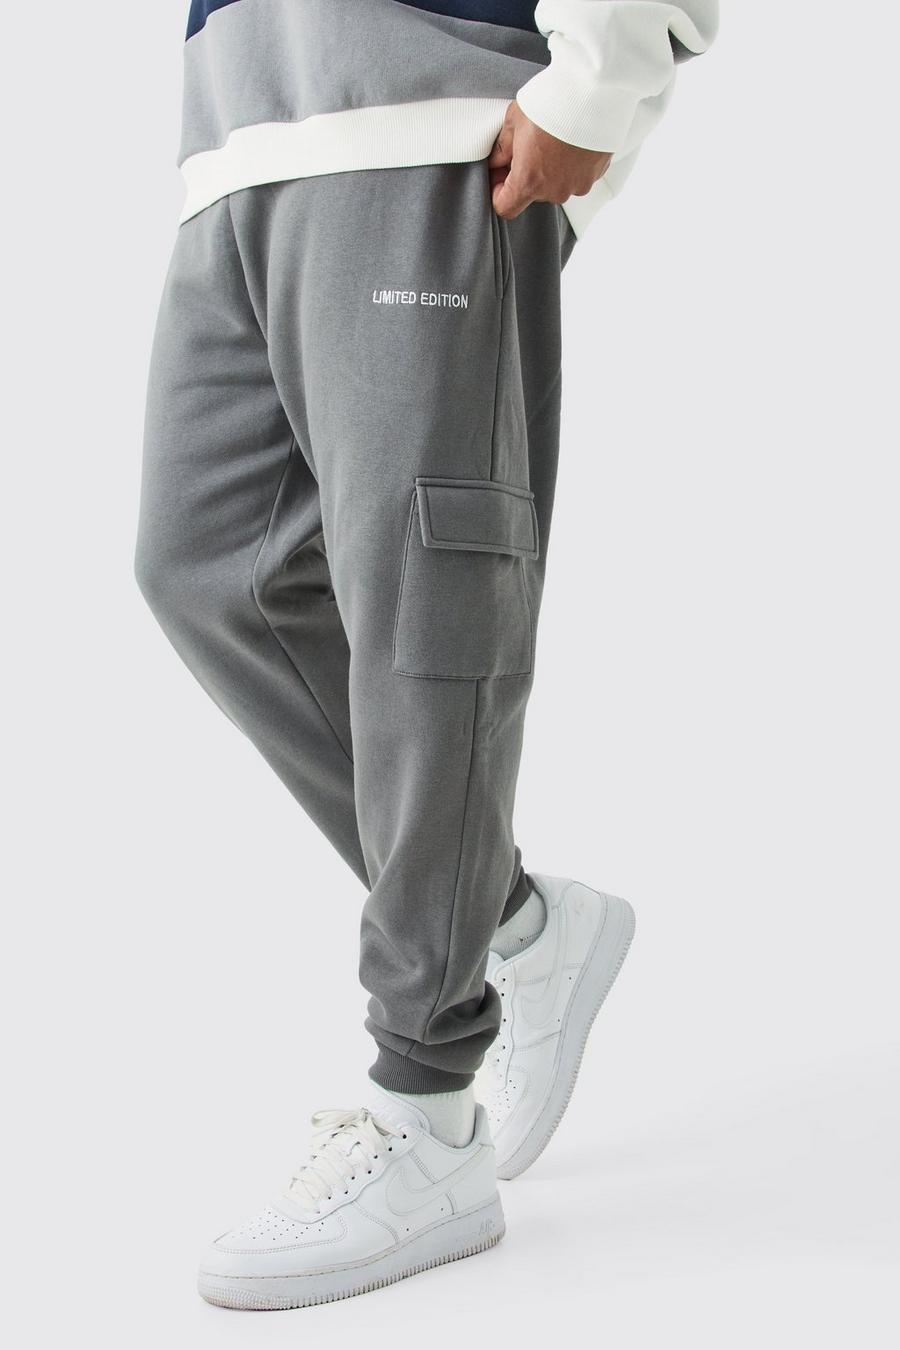 Pantalón deportivo Plus pitillo cargo Limited Edition, Charcoal